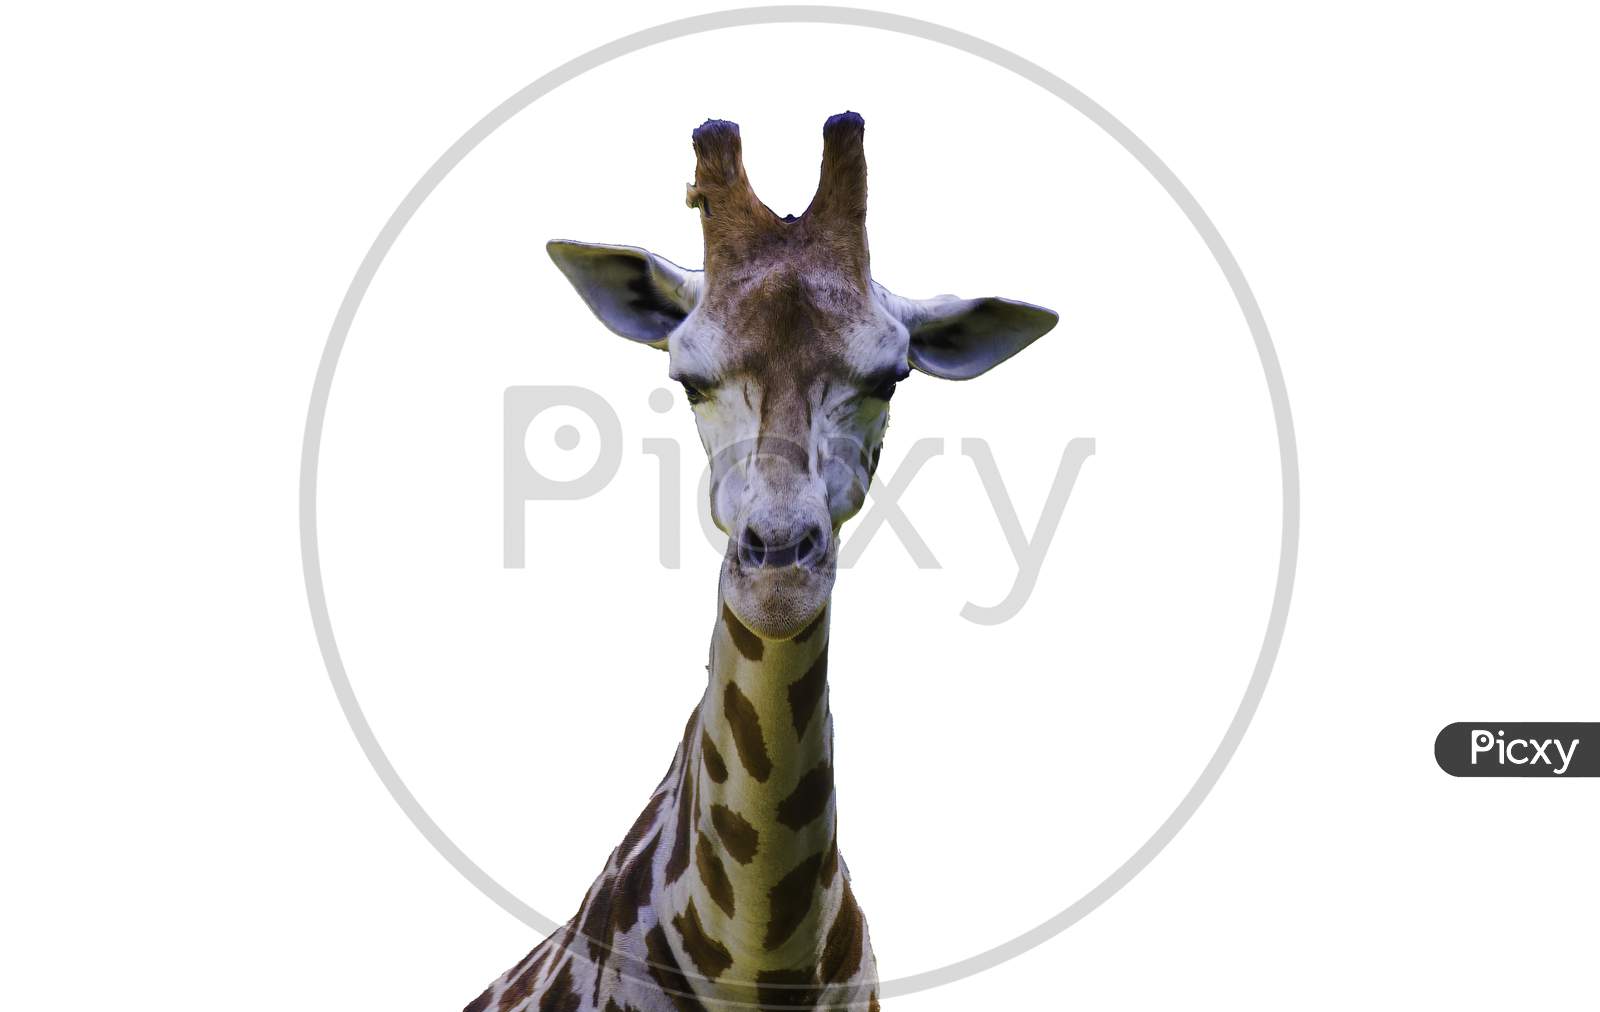 One Giraffe Front Profile Against White Background Shot In Krakow, Poland - Europe